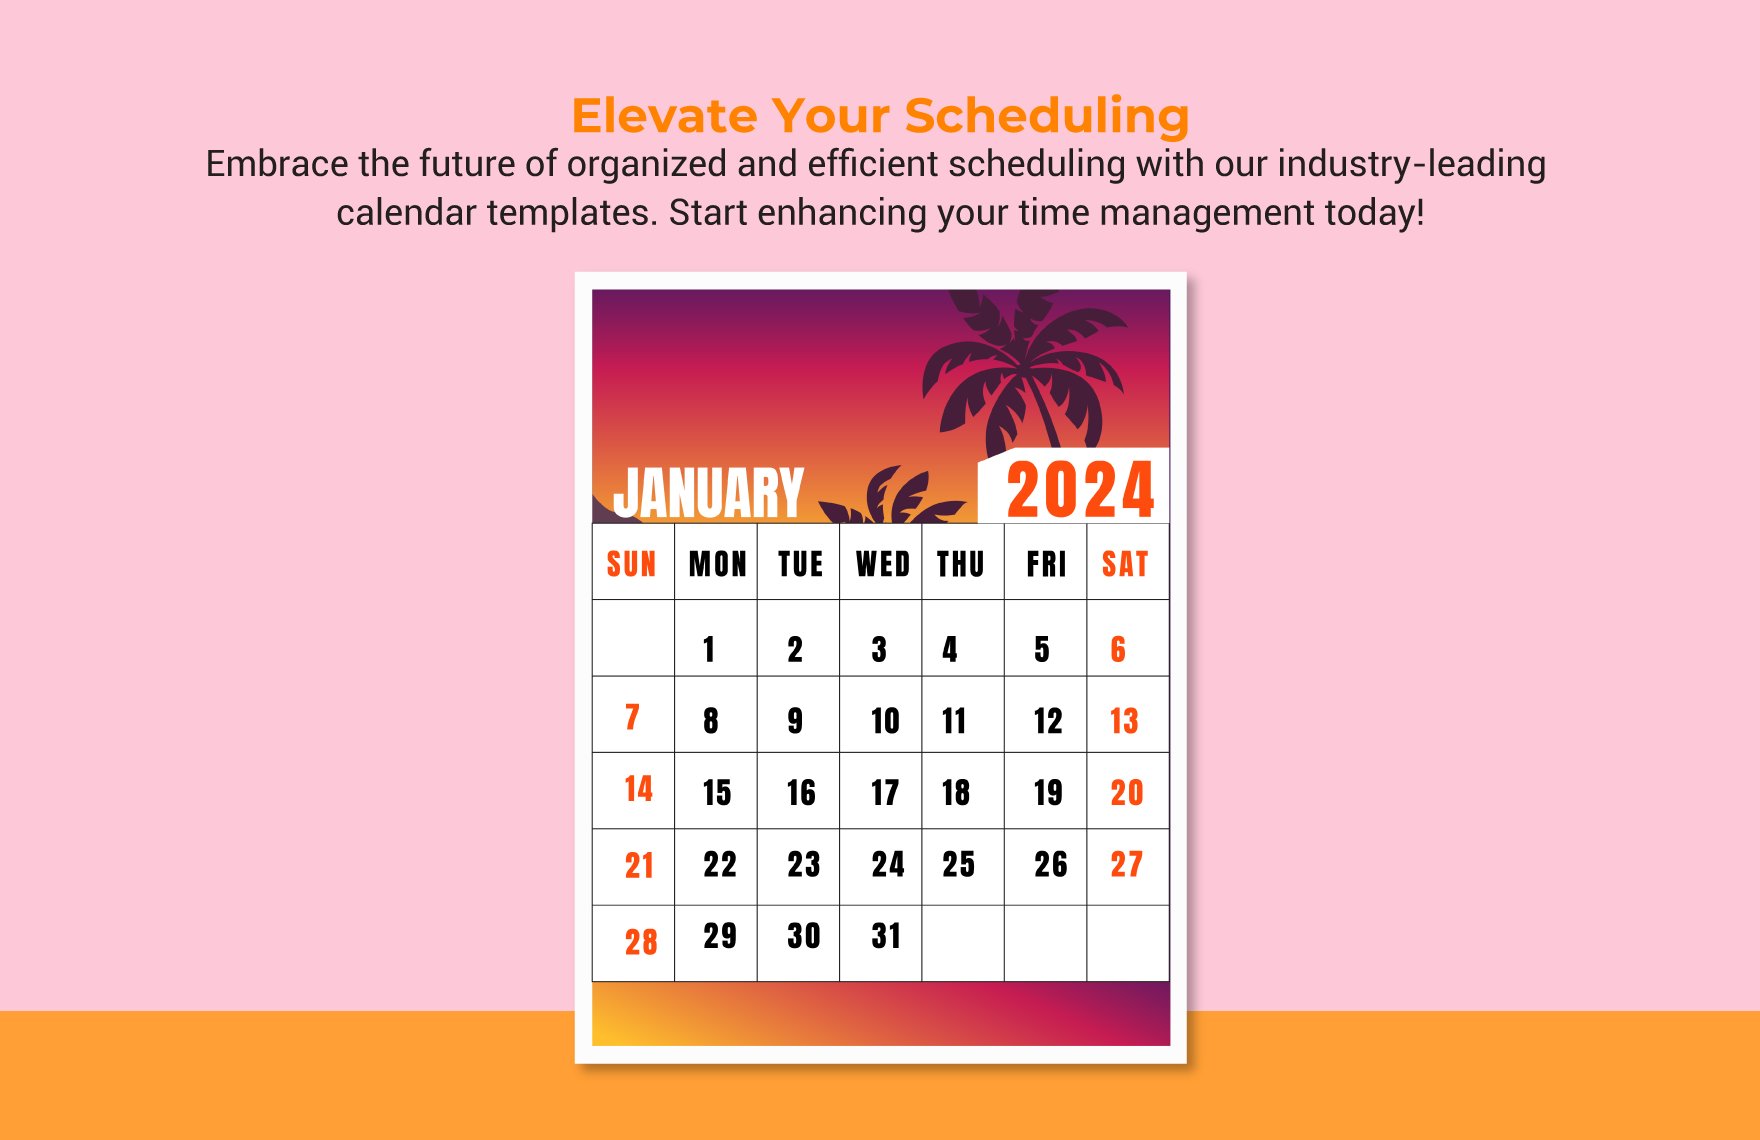 Calendar Design Template